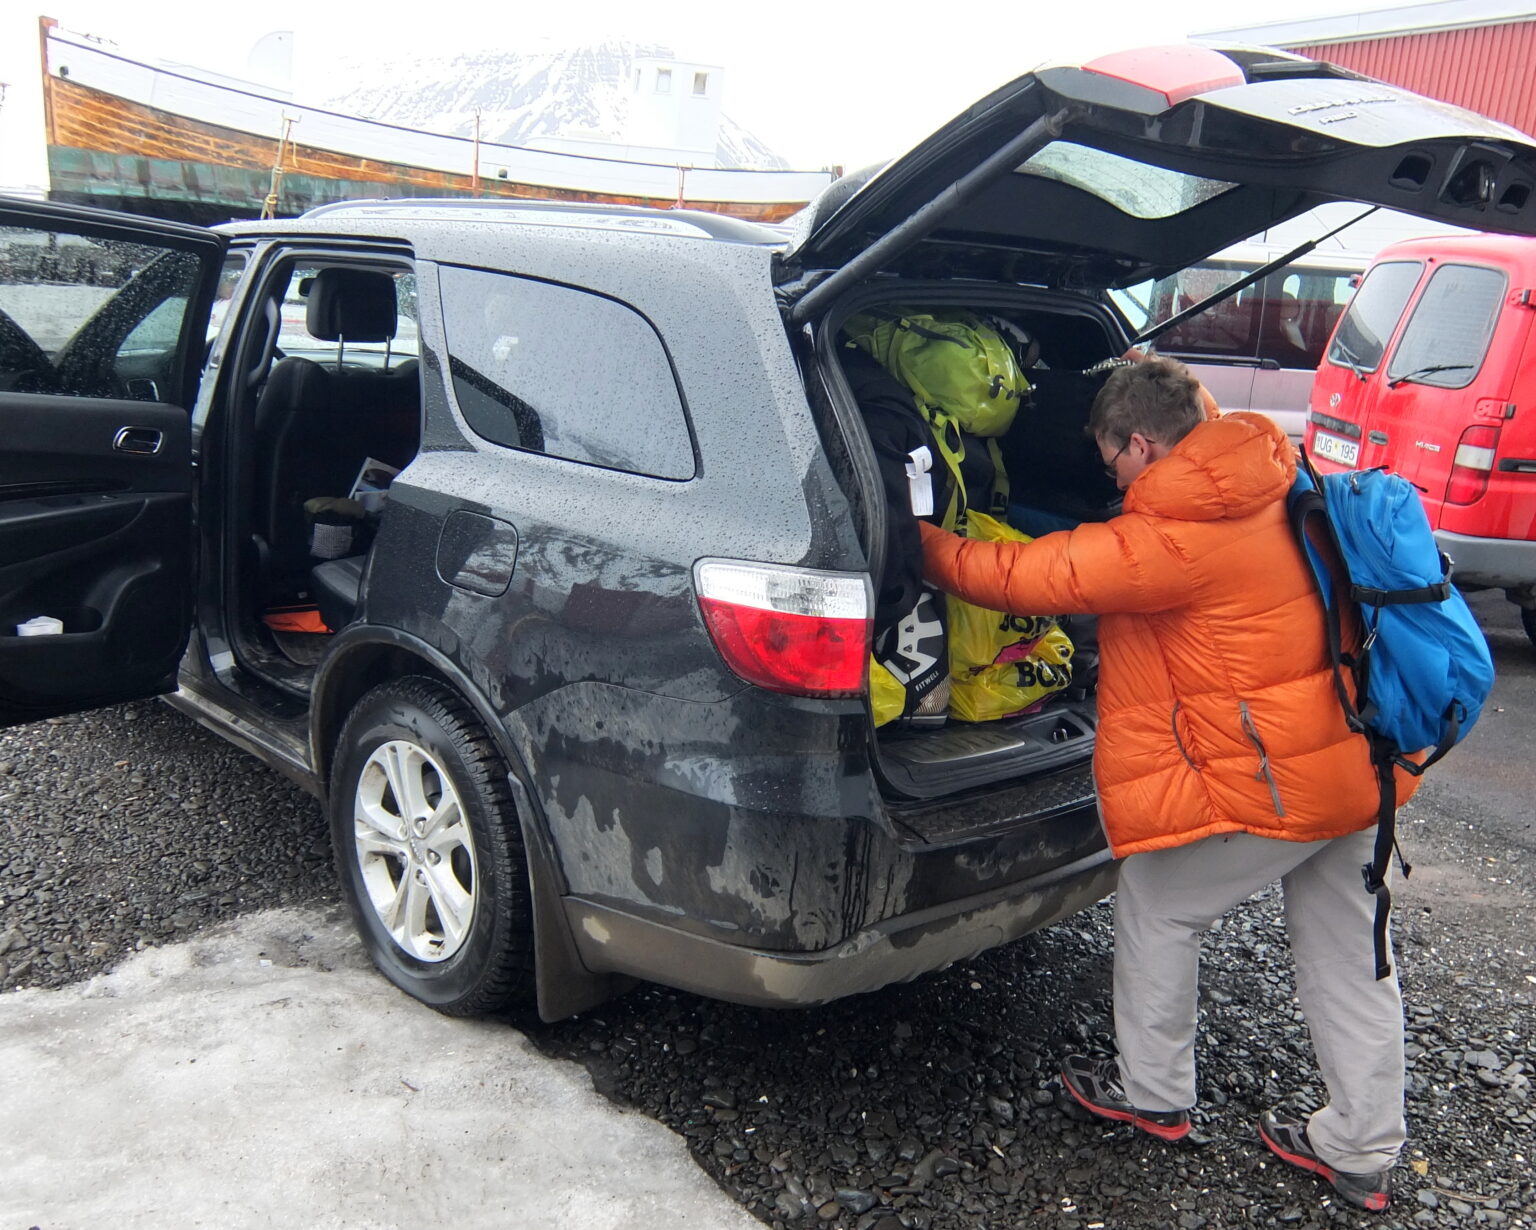 Filling the rental car full of ski touring gear